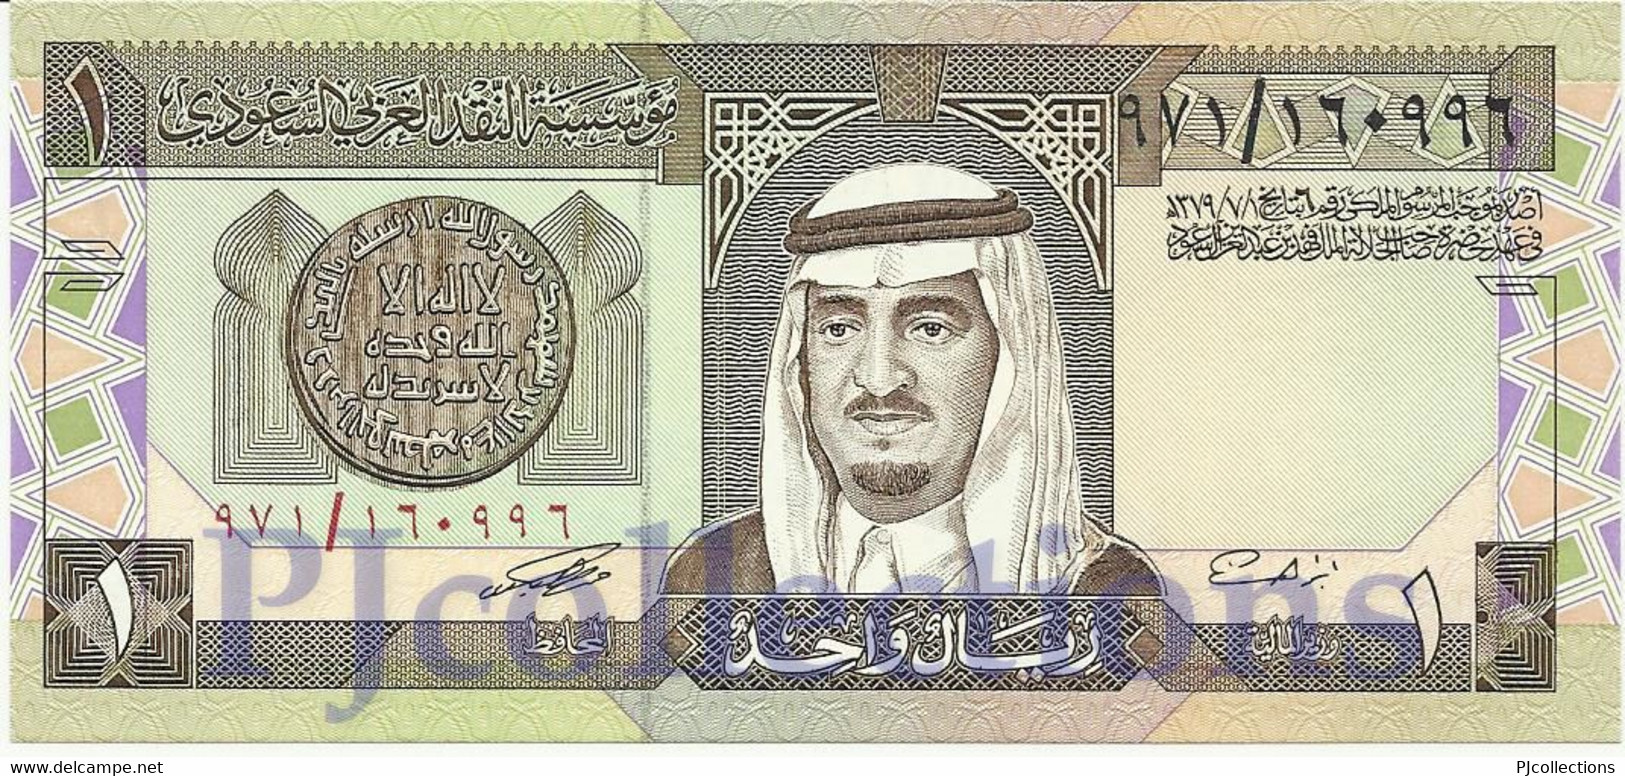 SAUDI ARABIA 1 RIYAL 1984 PICK 21d UNC - Saudi Arabia